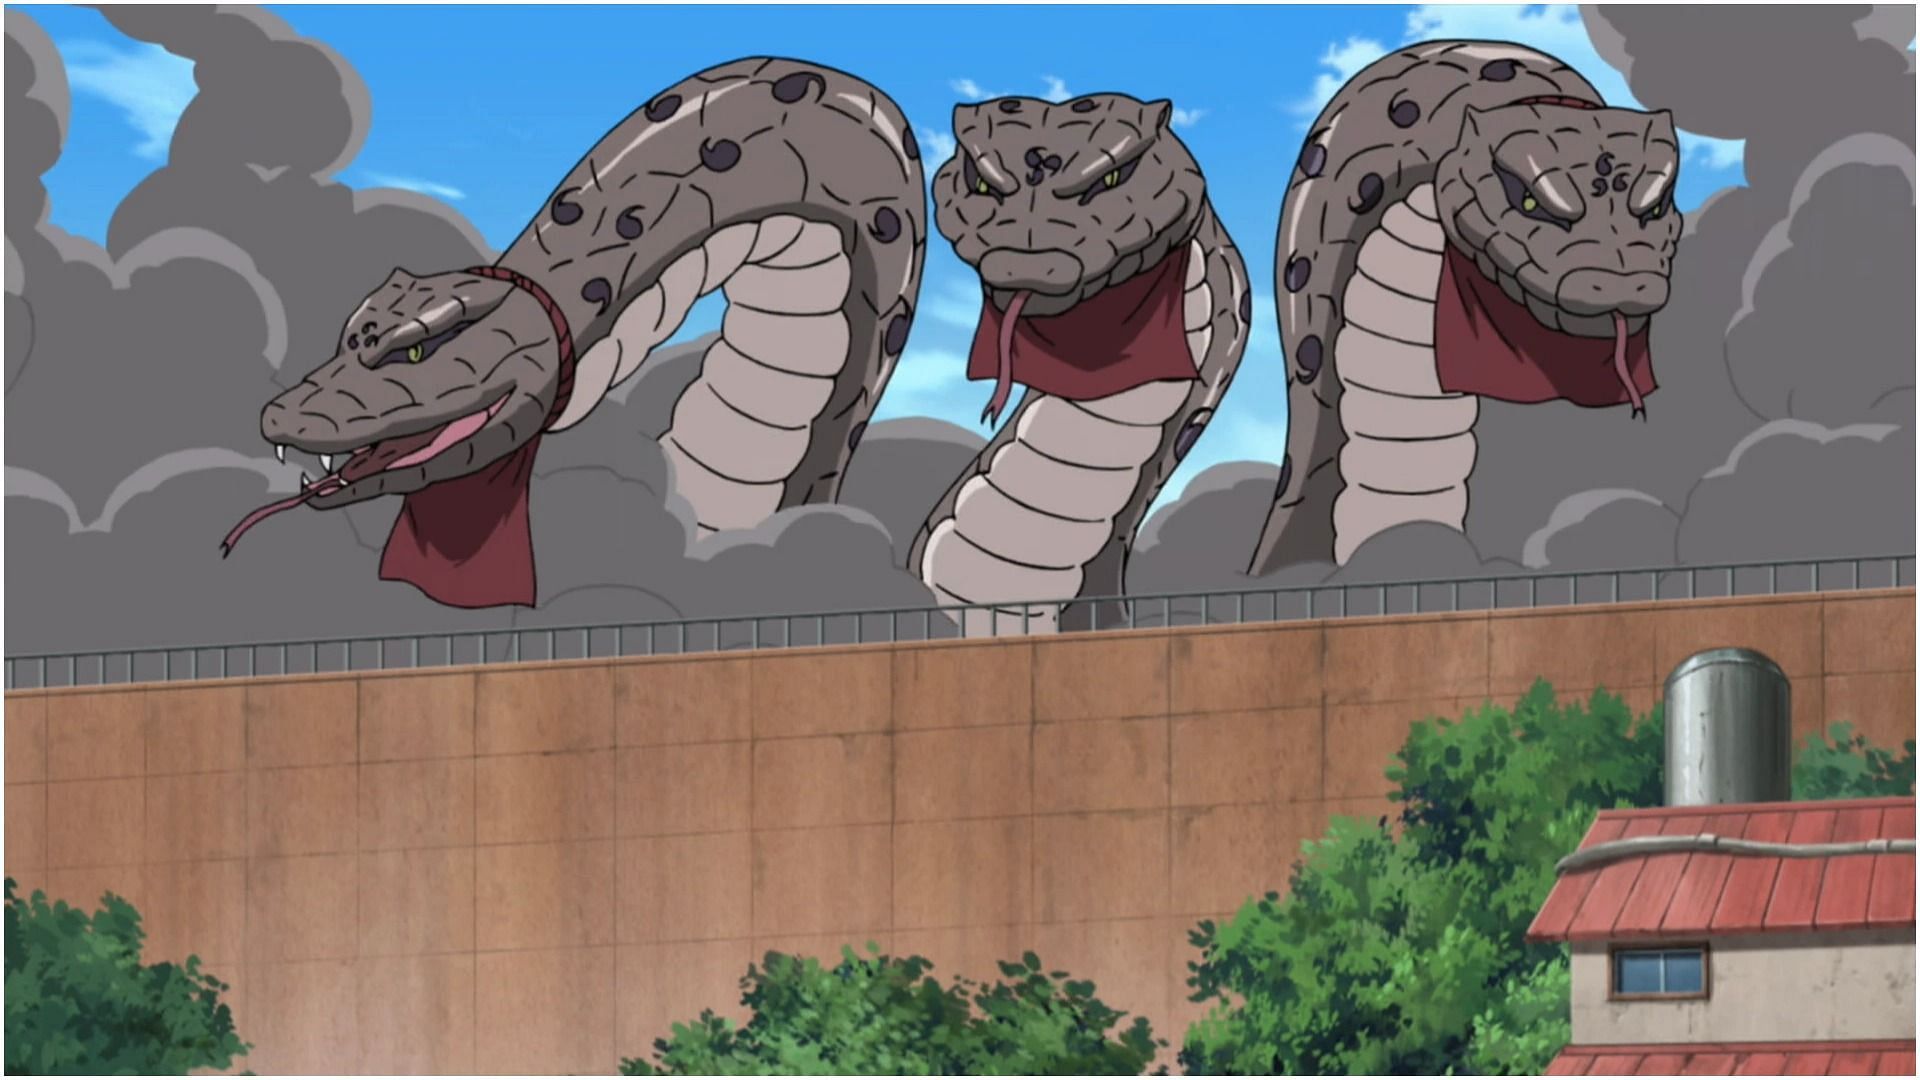 3 Giant Snakes as seen in the anime (Image via Studio Pierrot)